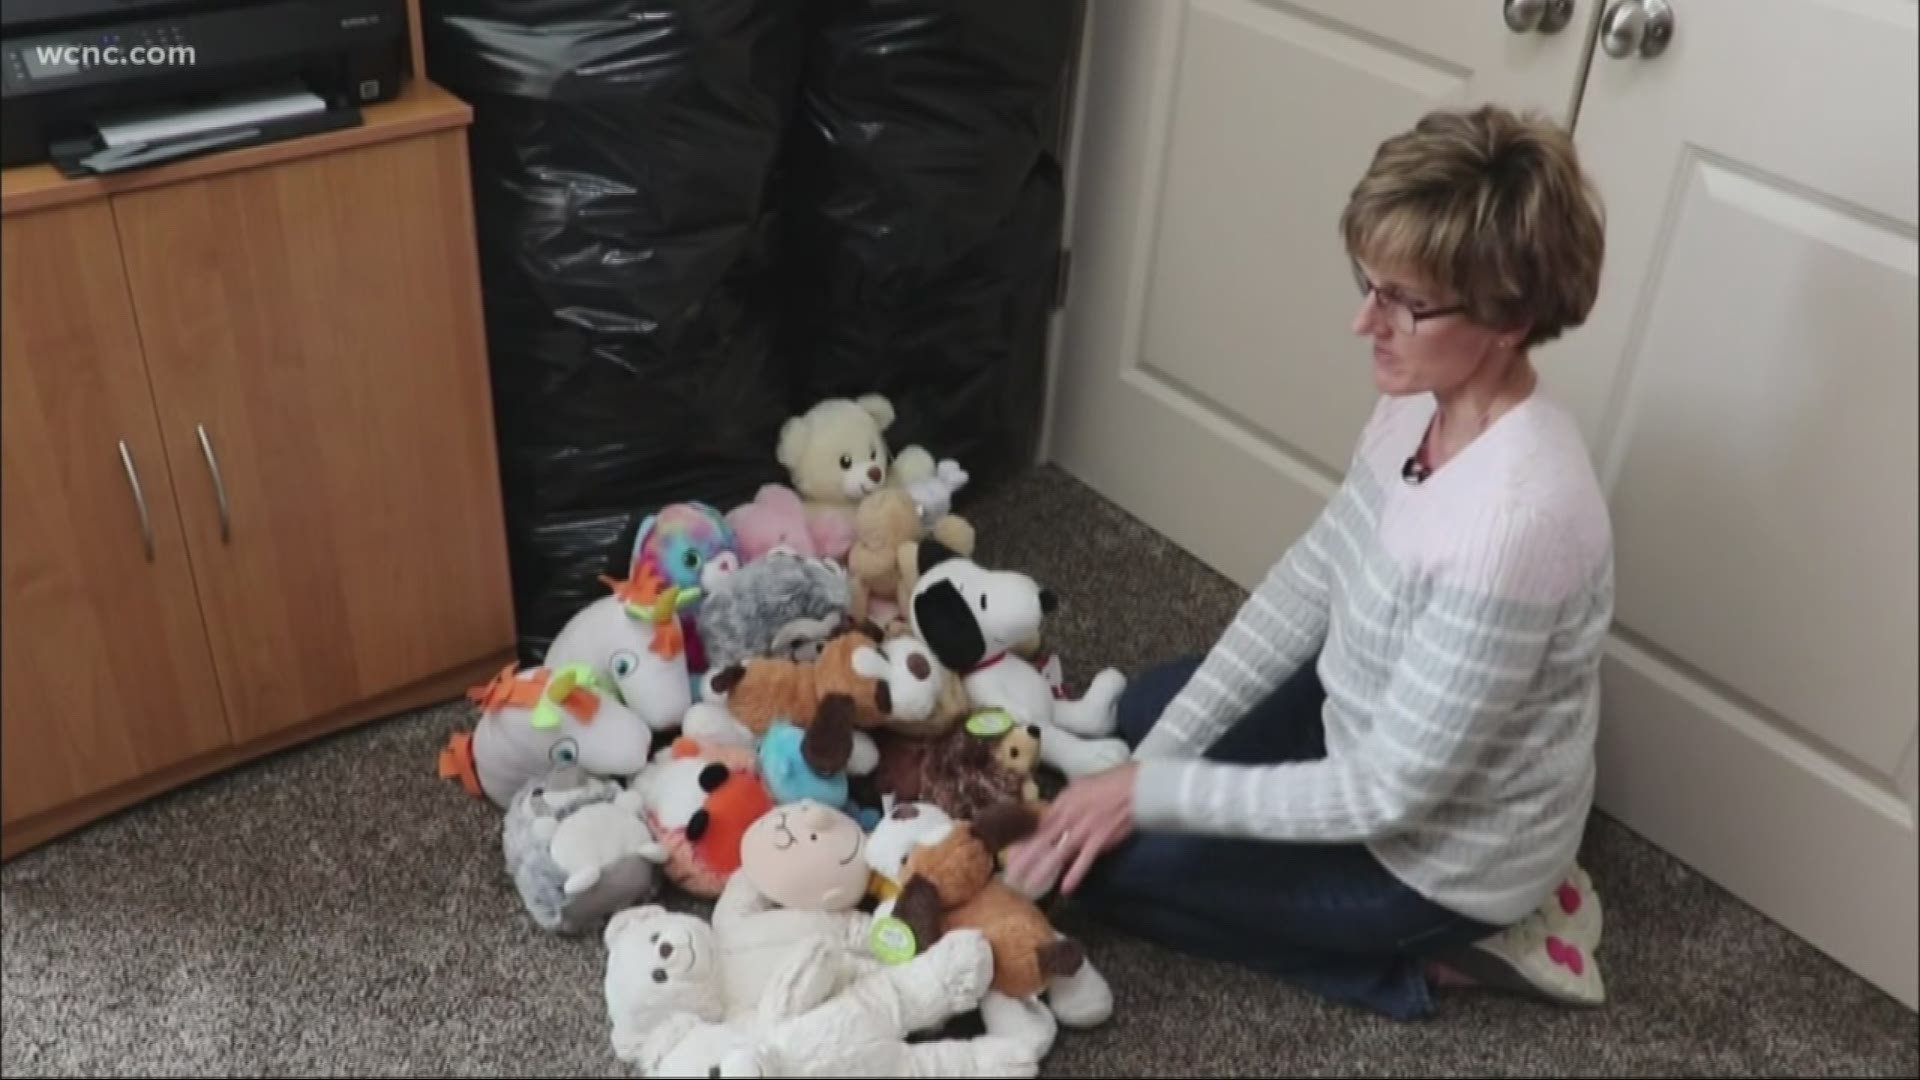 Donate stuffed animals to kids in children's hospital 